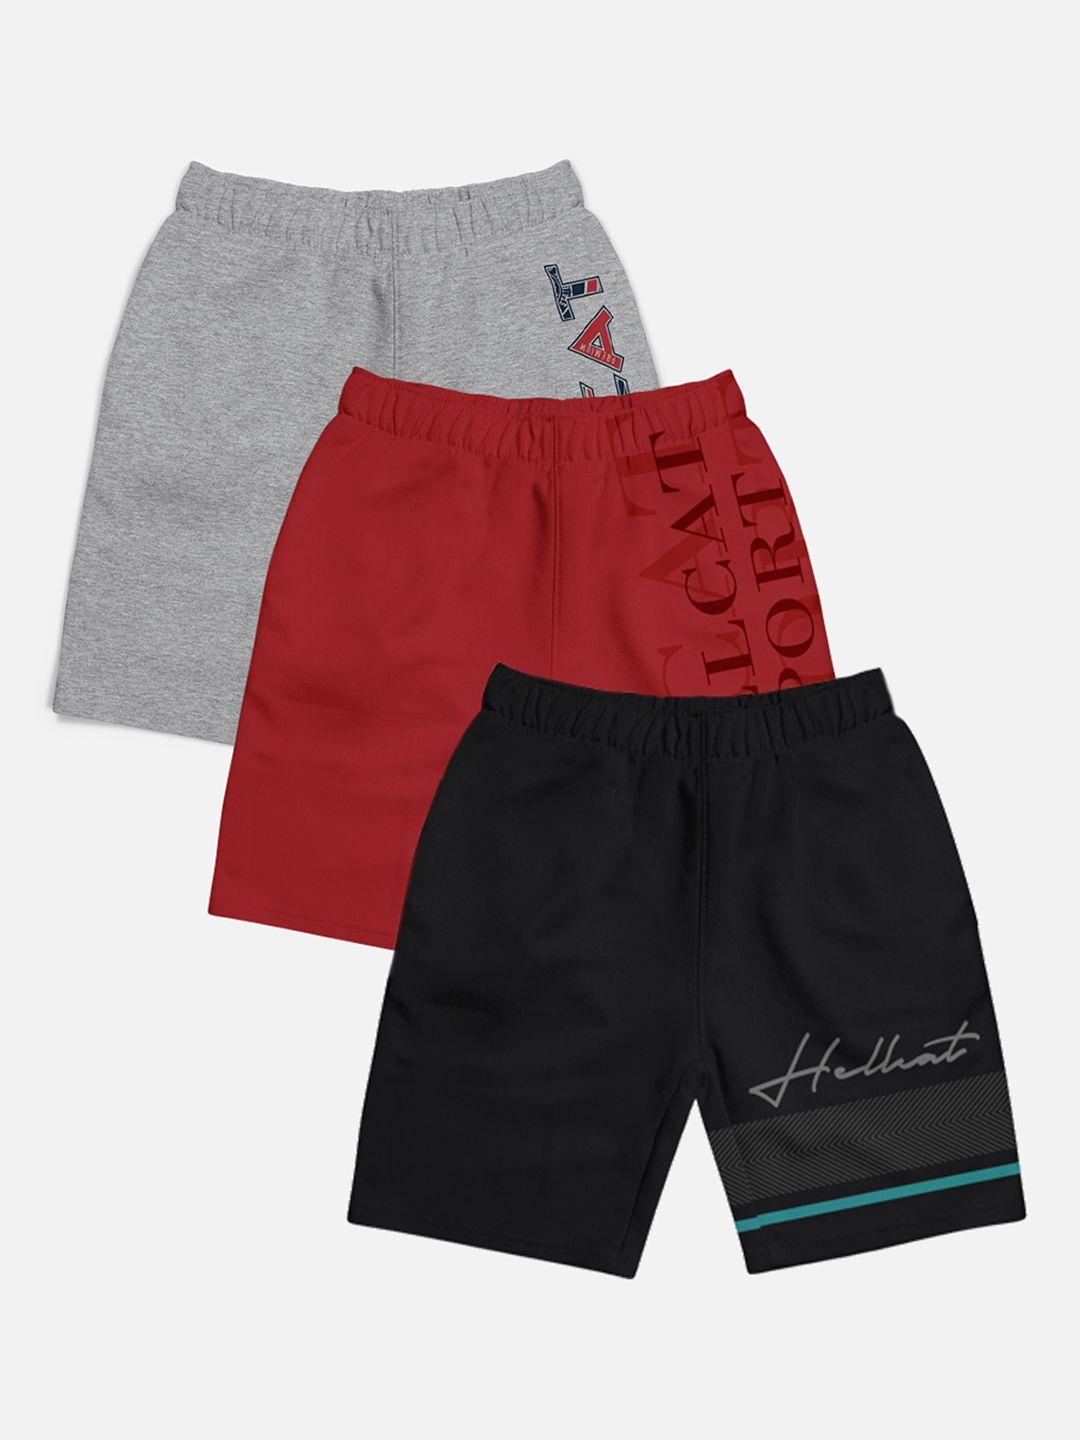 hellcat boys pack of 3 cotton sports shorts